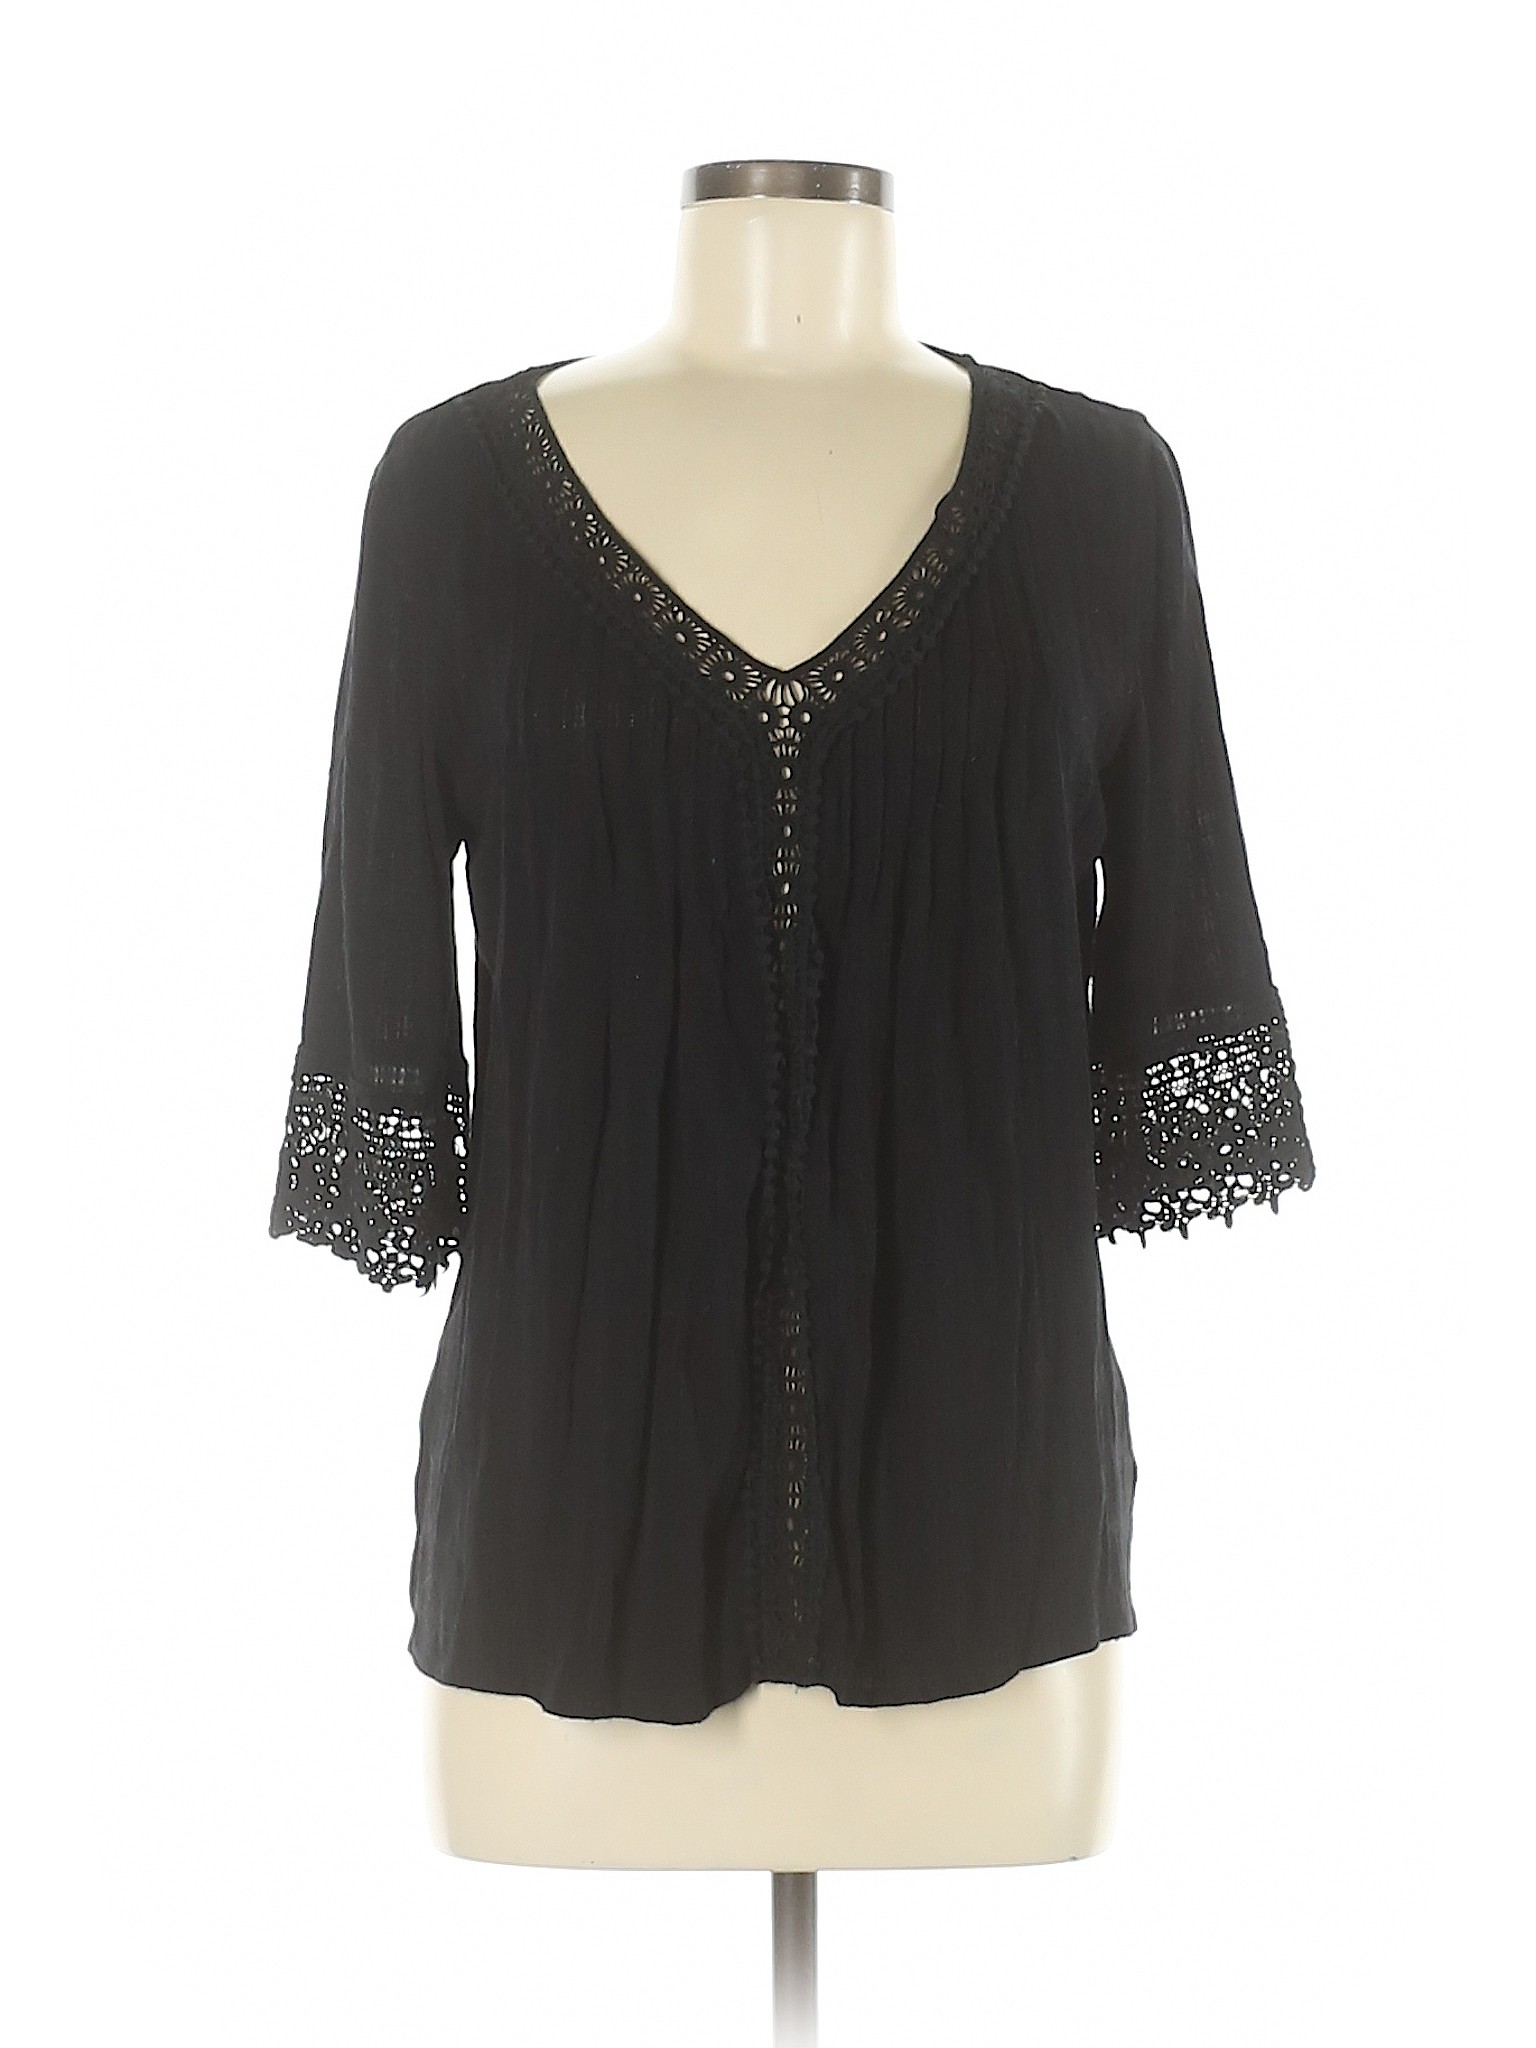 Knox Rose Women Black Long Sleeve Blouse S | eBay